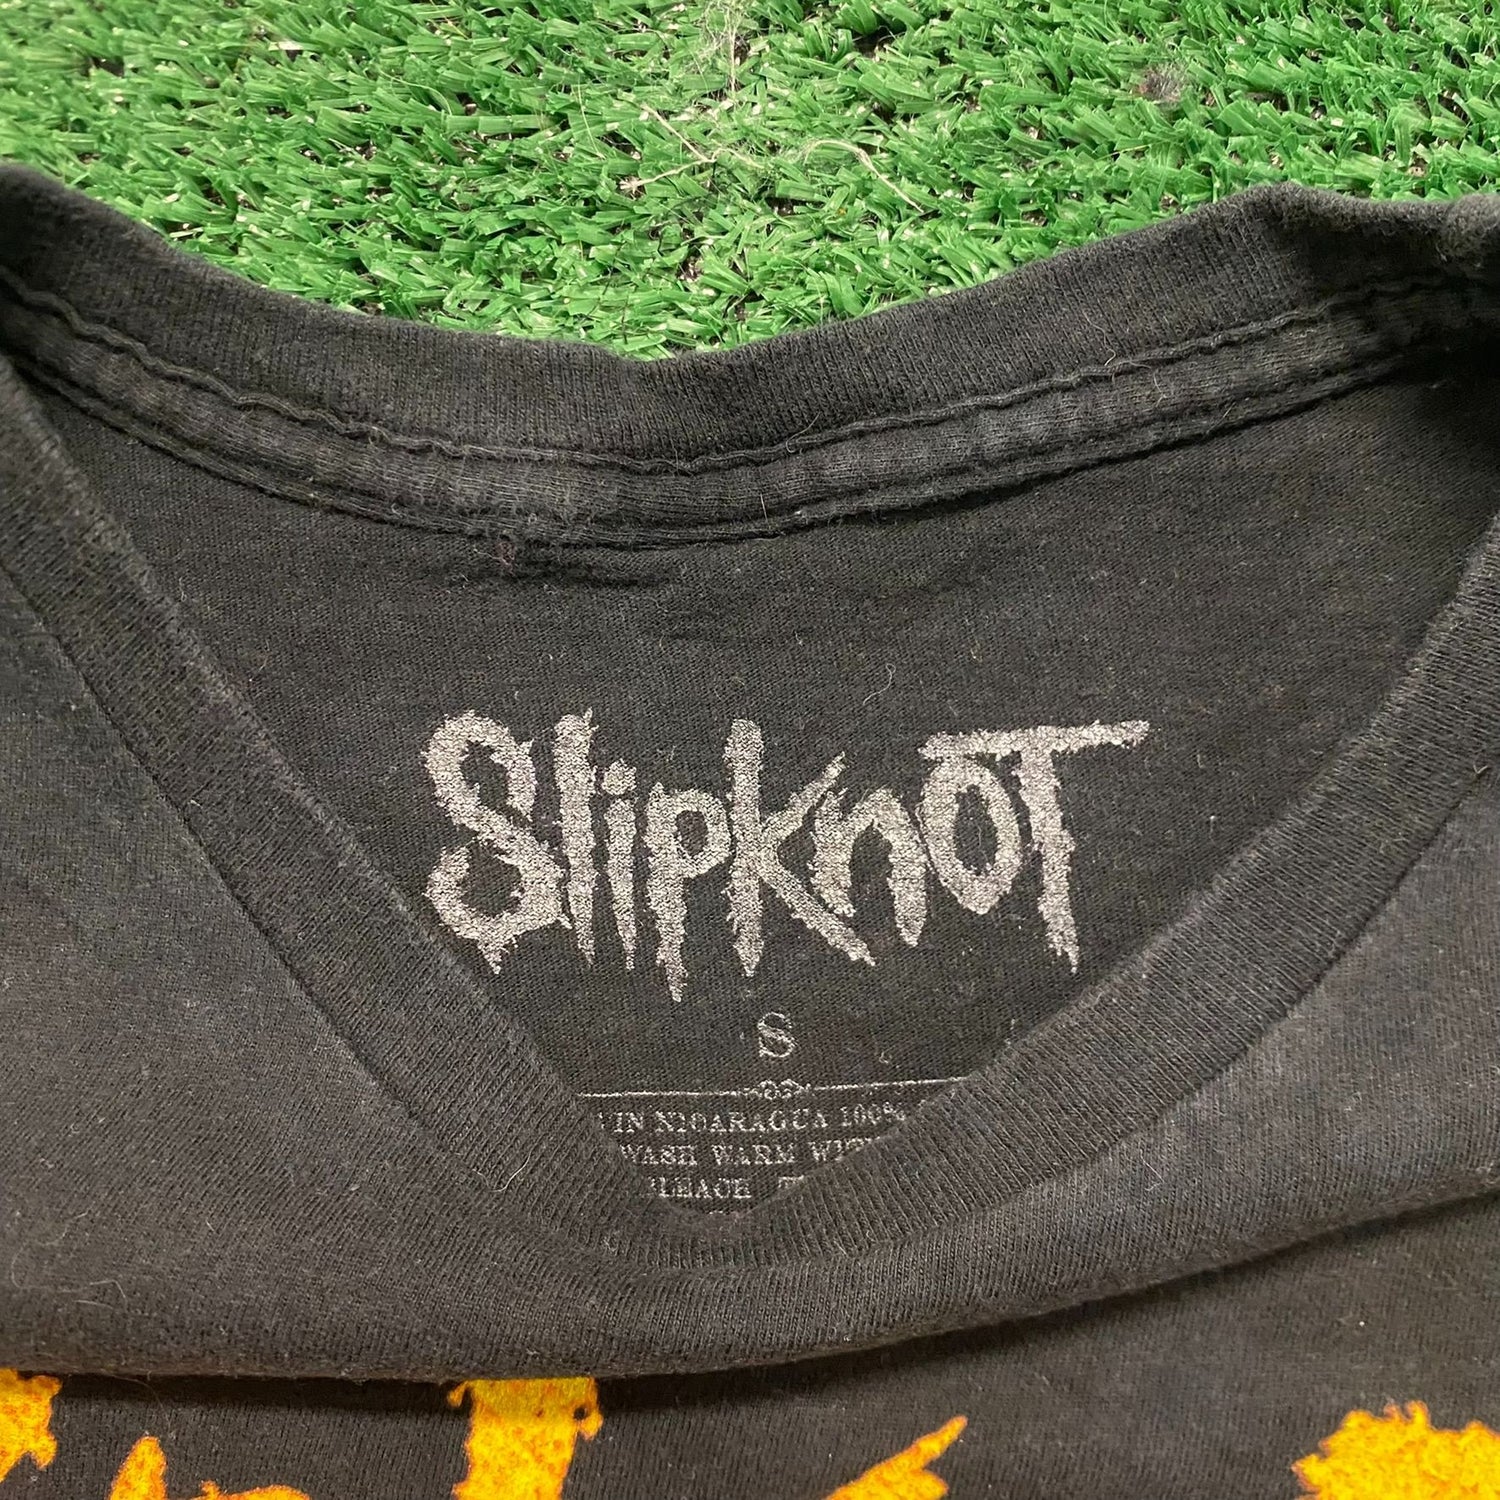 Band Agent Slipknot Thrift – Vintage Metal T-Shirt